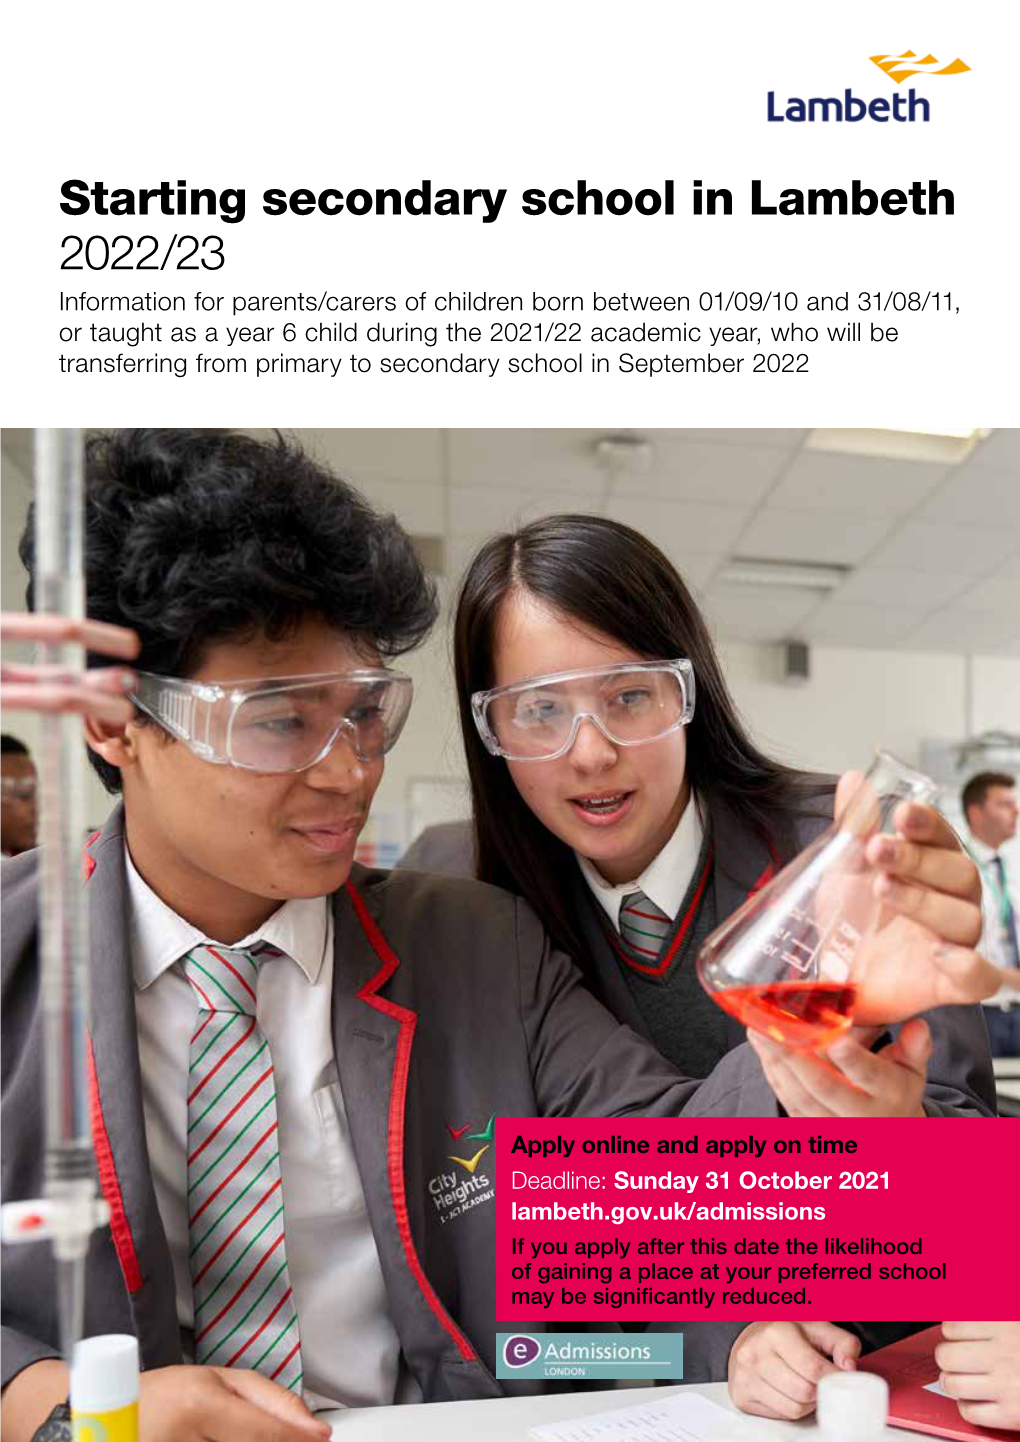 Starting Secondary School in Lambeth 2022/23